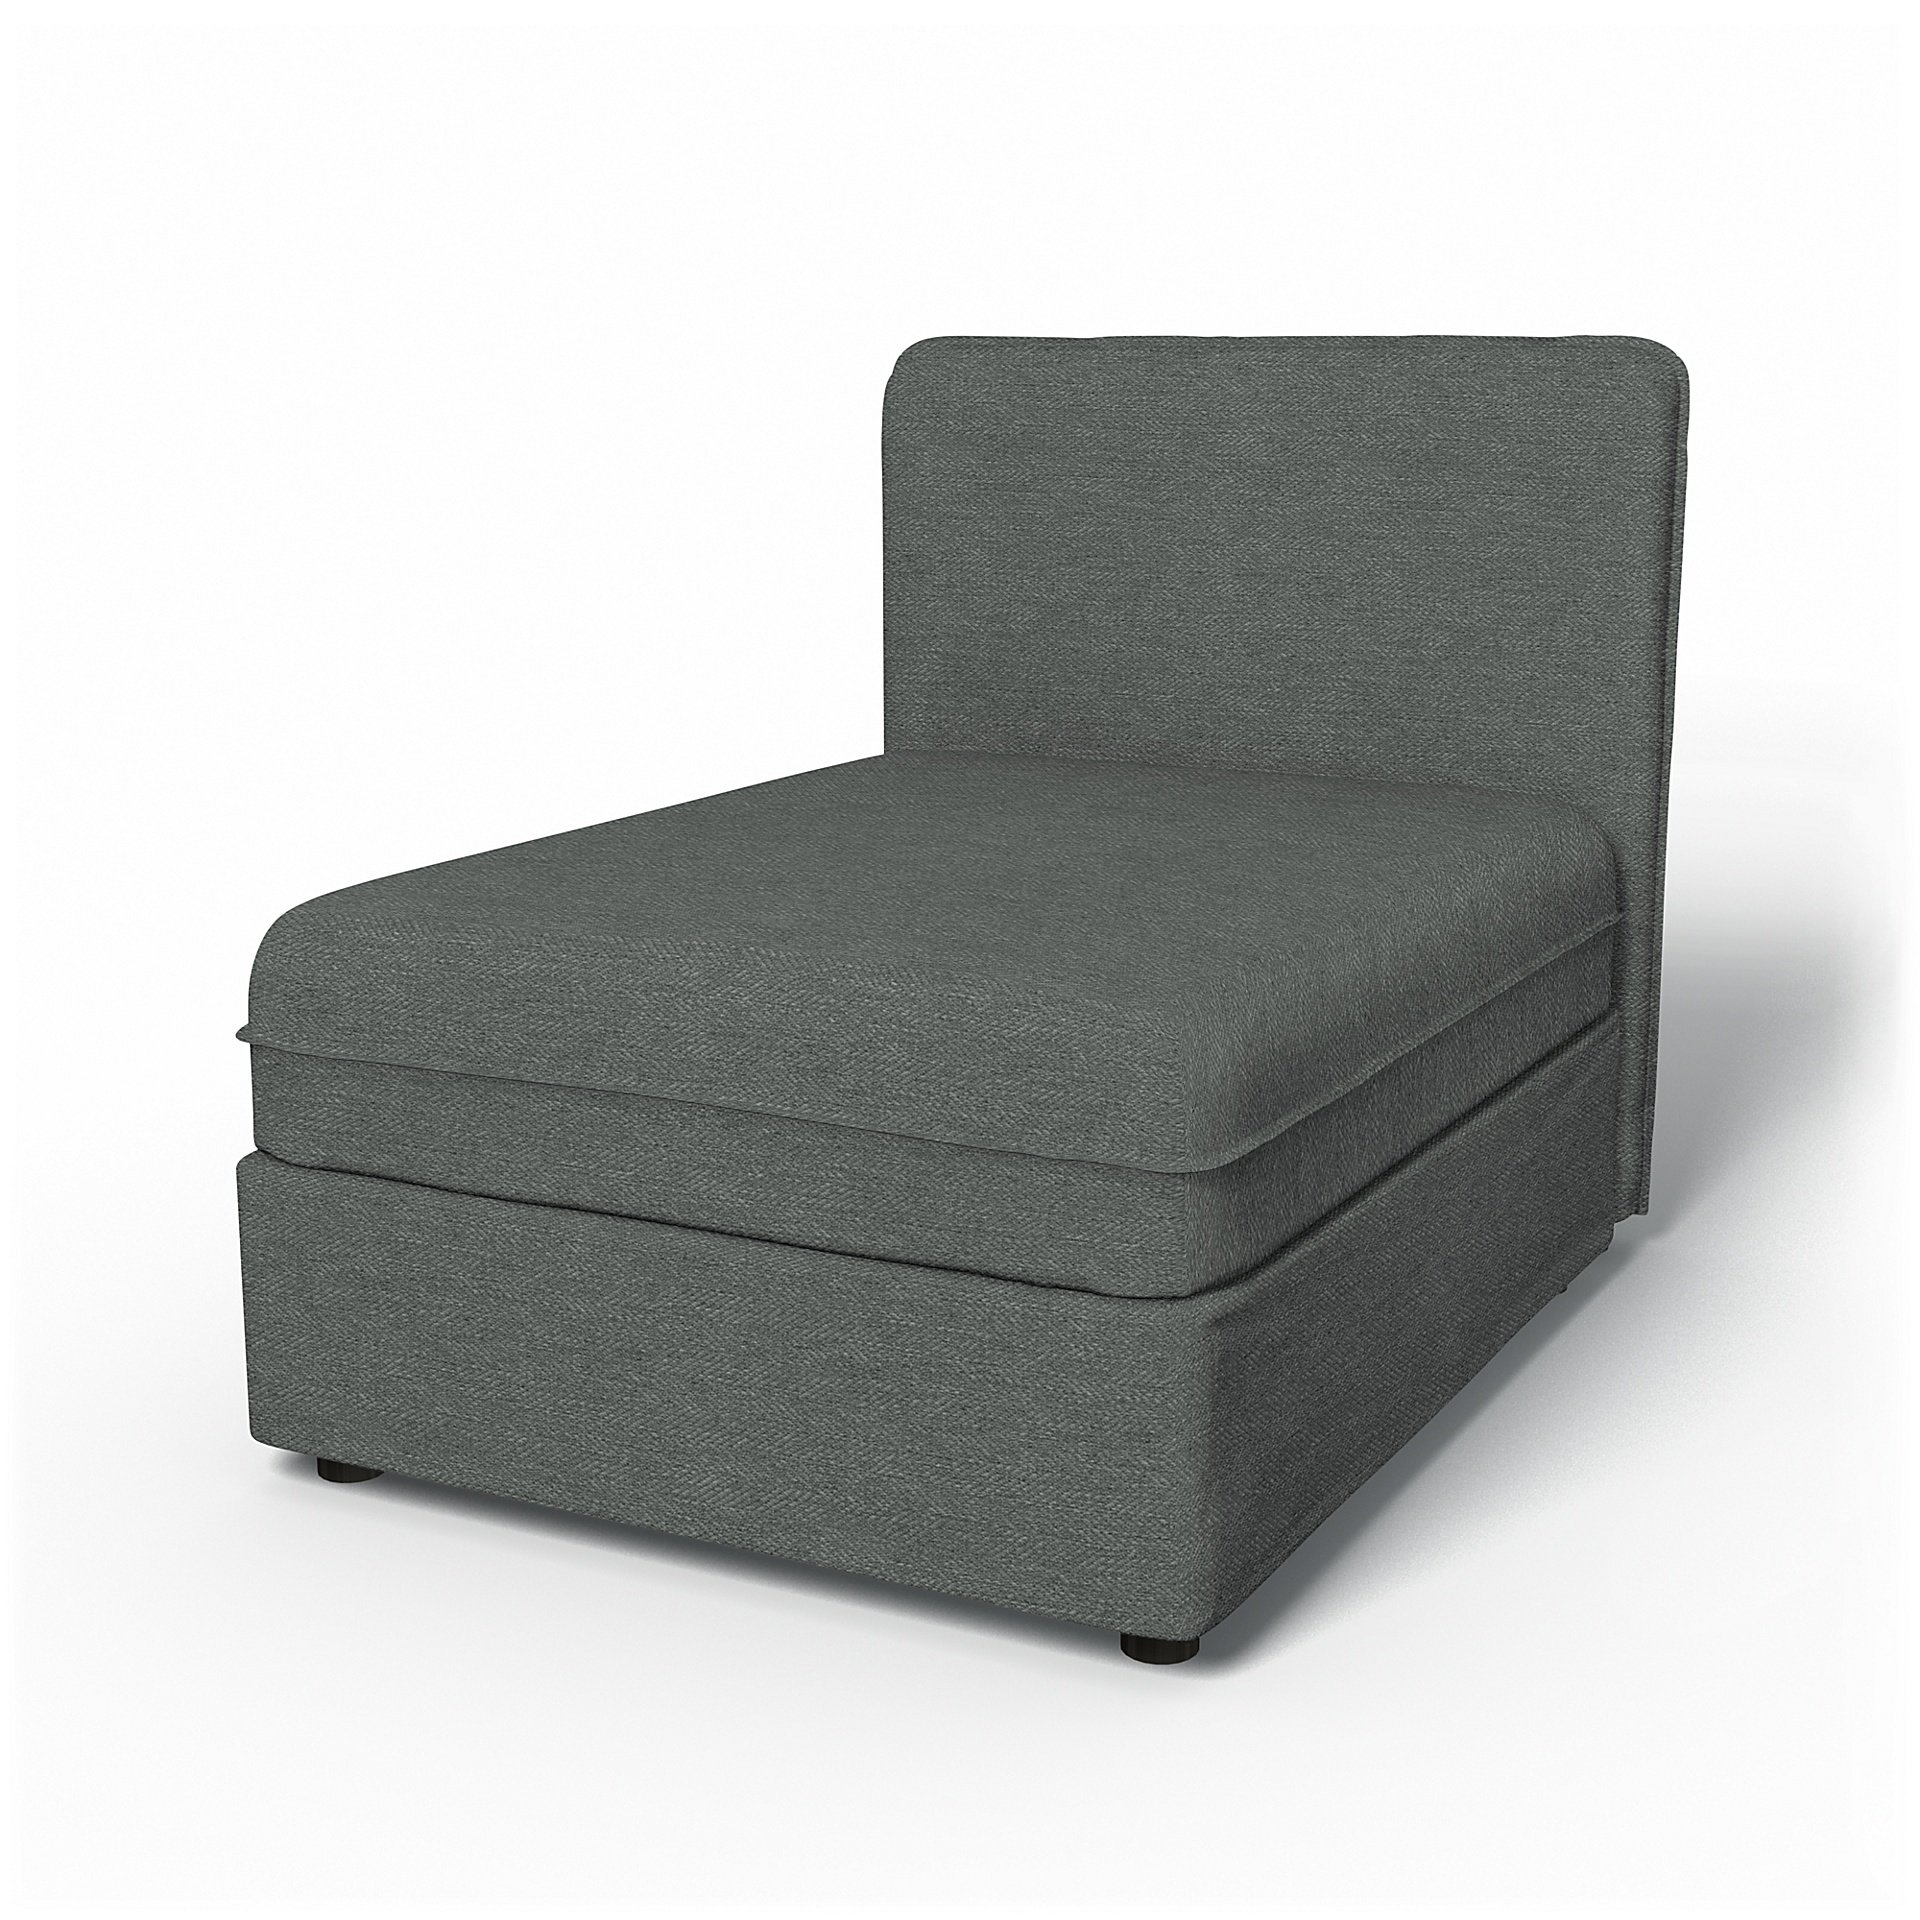 IKEA - Vallentuna Seat Module with Low Back Cover 80x100cm 32x39in, Laurel, Boucle & Texture - Bemz